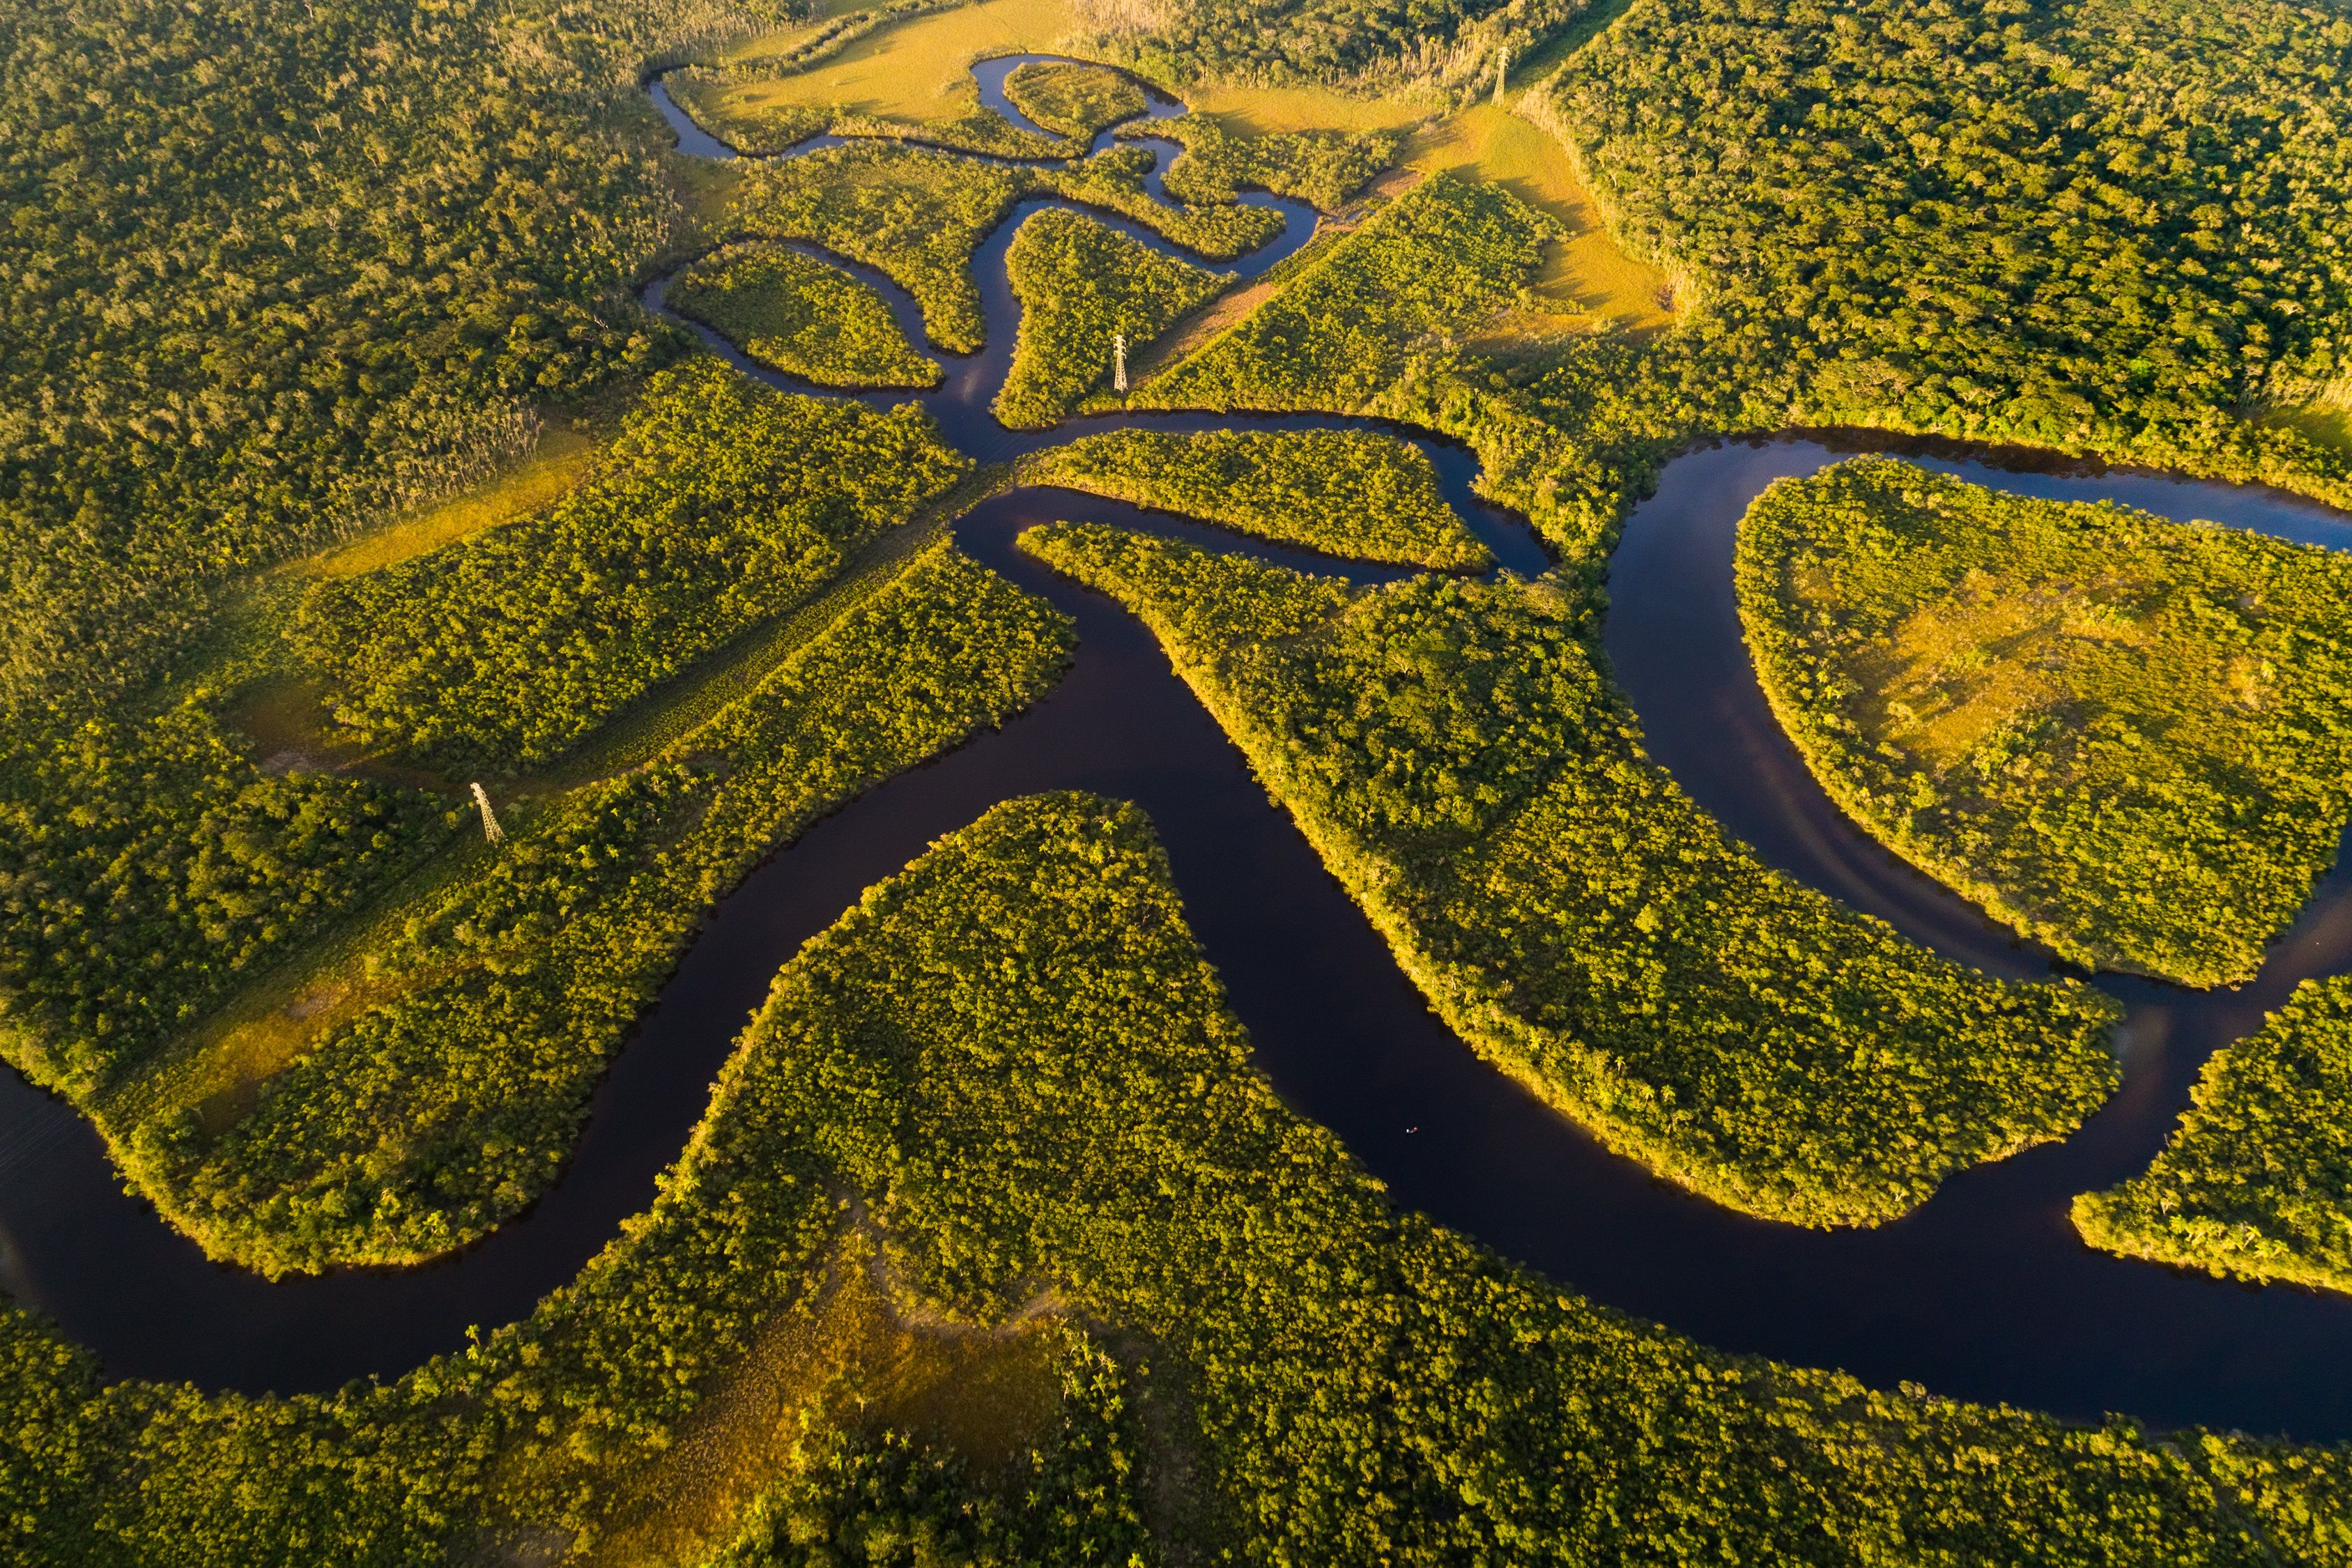 Amazon rainforest in Brazil. Image by Gustavo Frazao / Shutterstock. Brazil, undated.